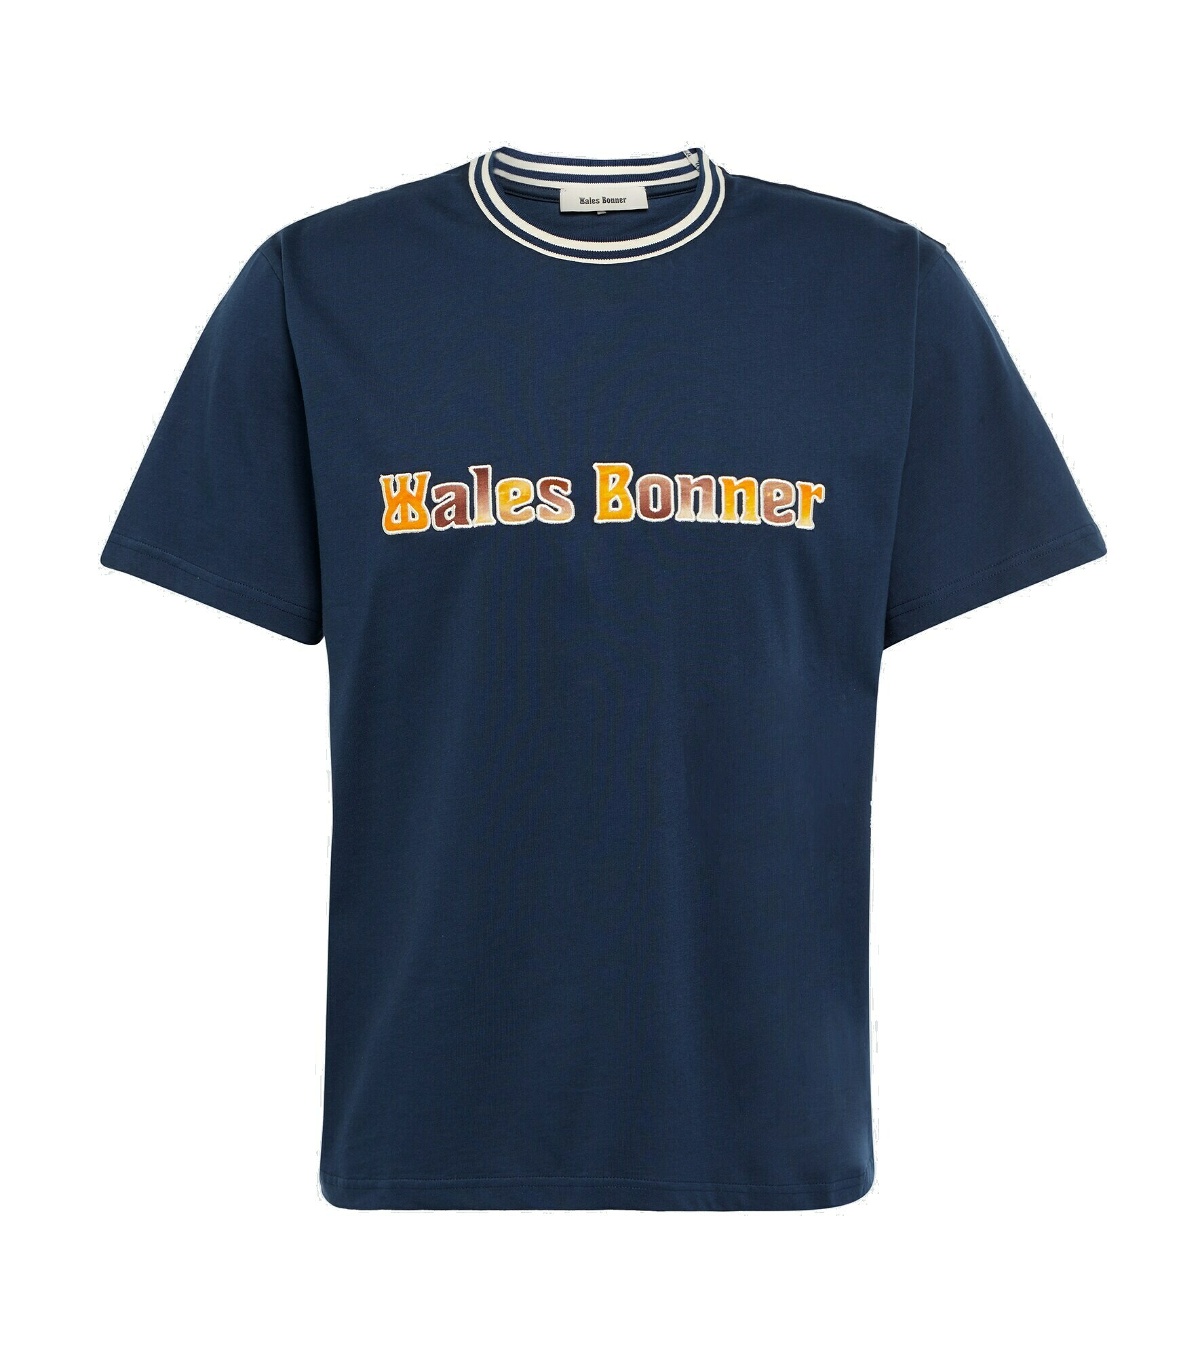 Wales Bonner - Original embroidered cotton T-shirt Wales Bonner